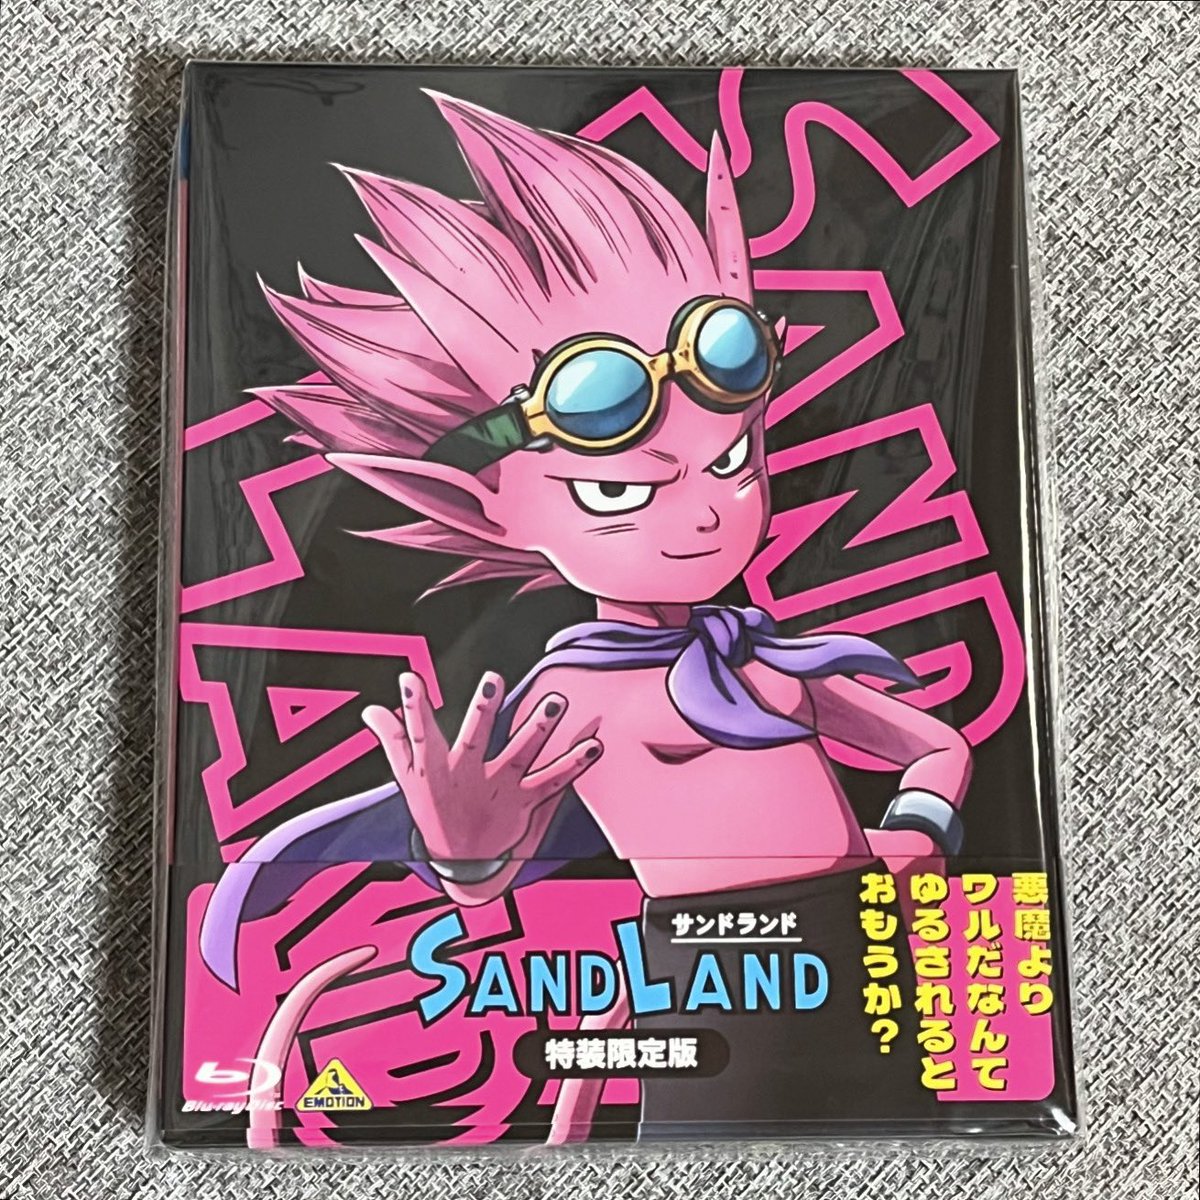 SAND  LAND Blu-ray ✨
#SANDLAND
#サンドランド